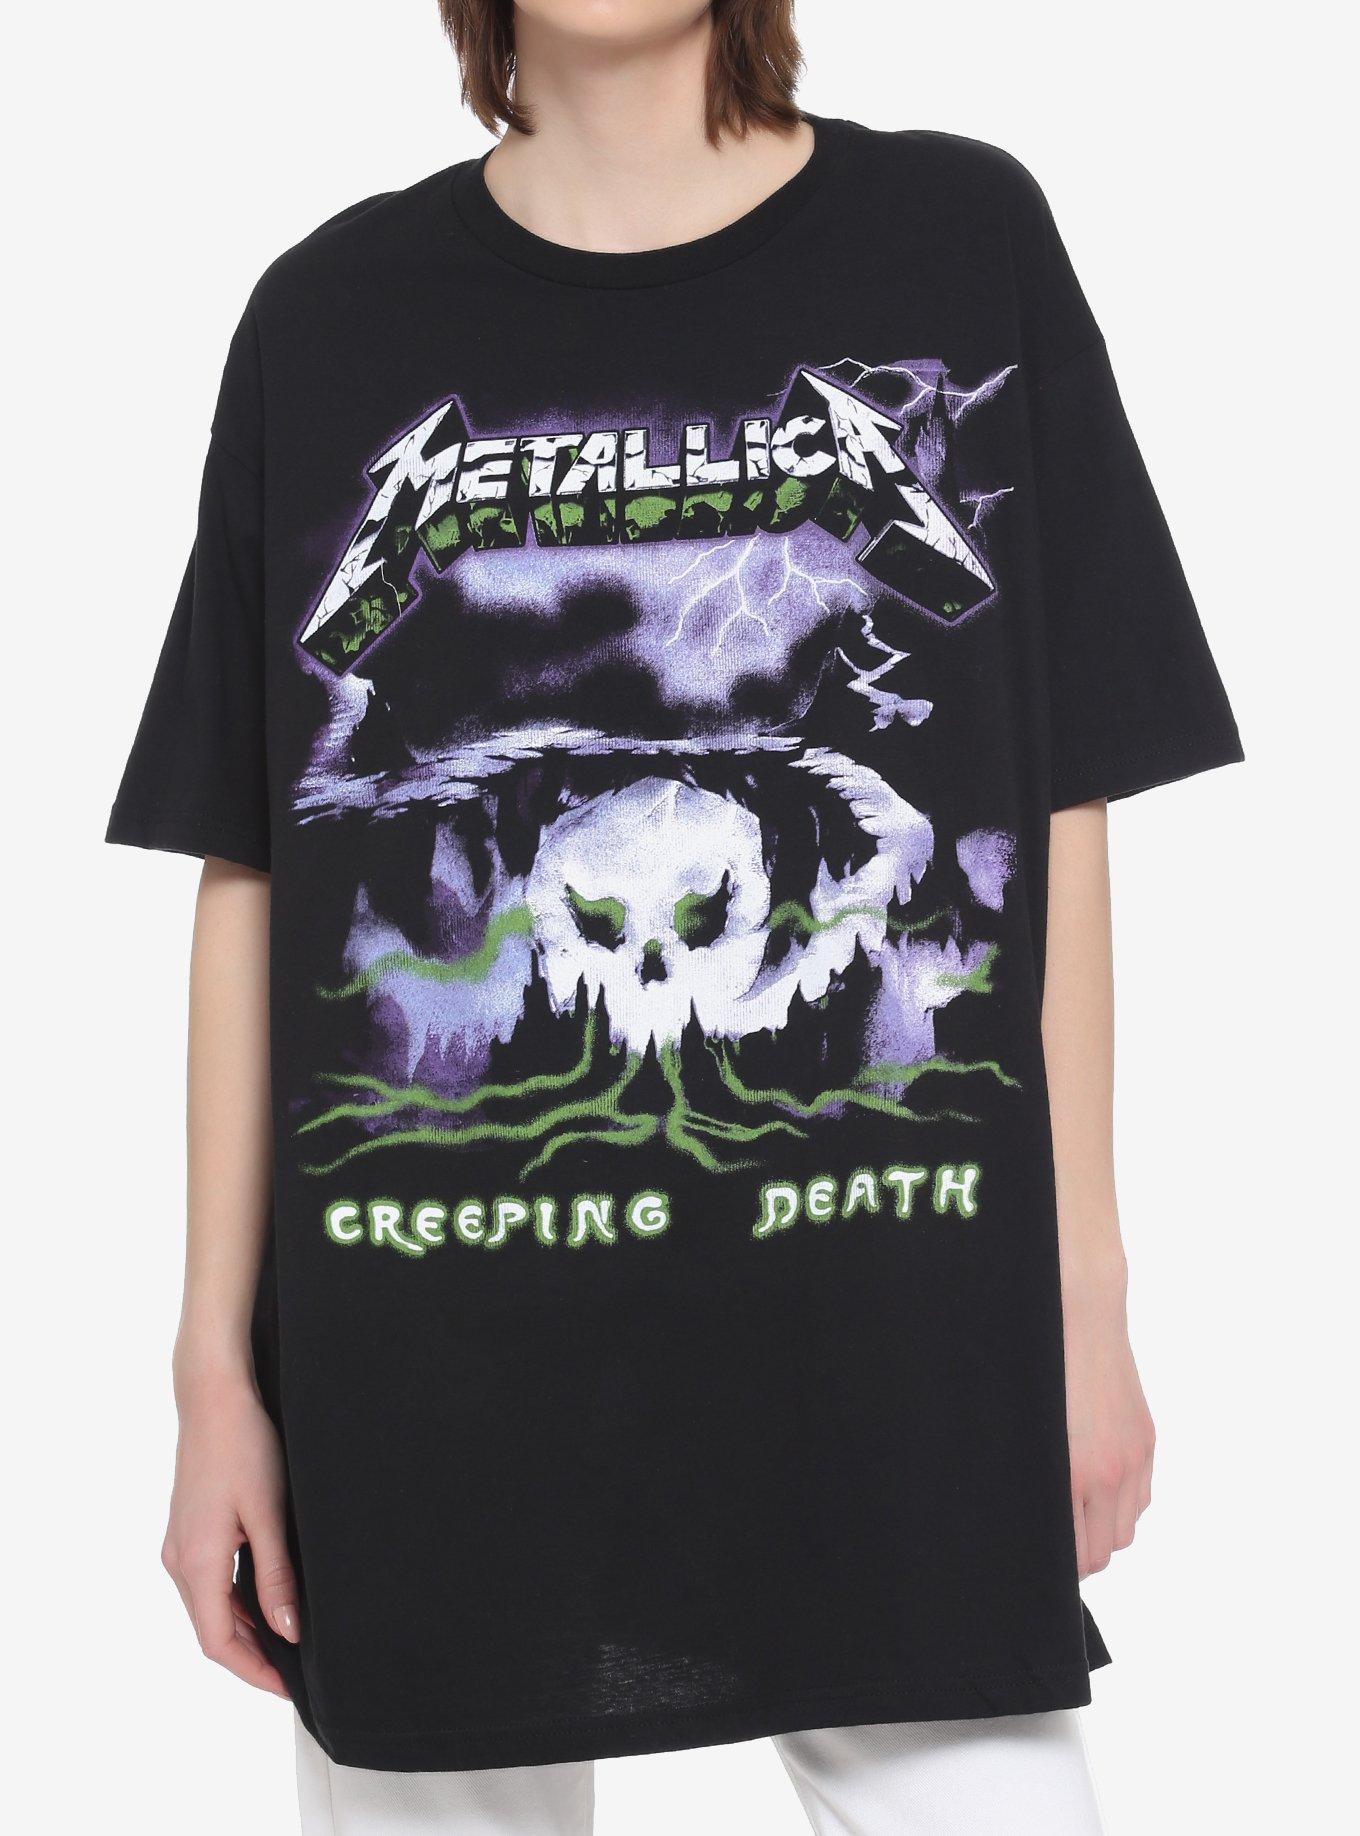 Patch Metallica - Creeping Death